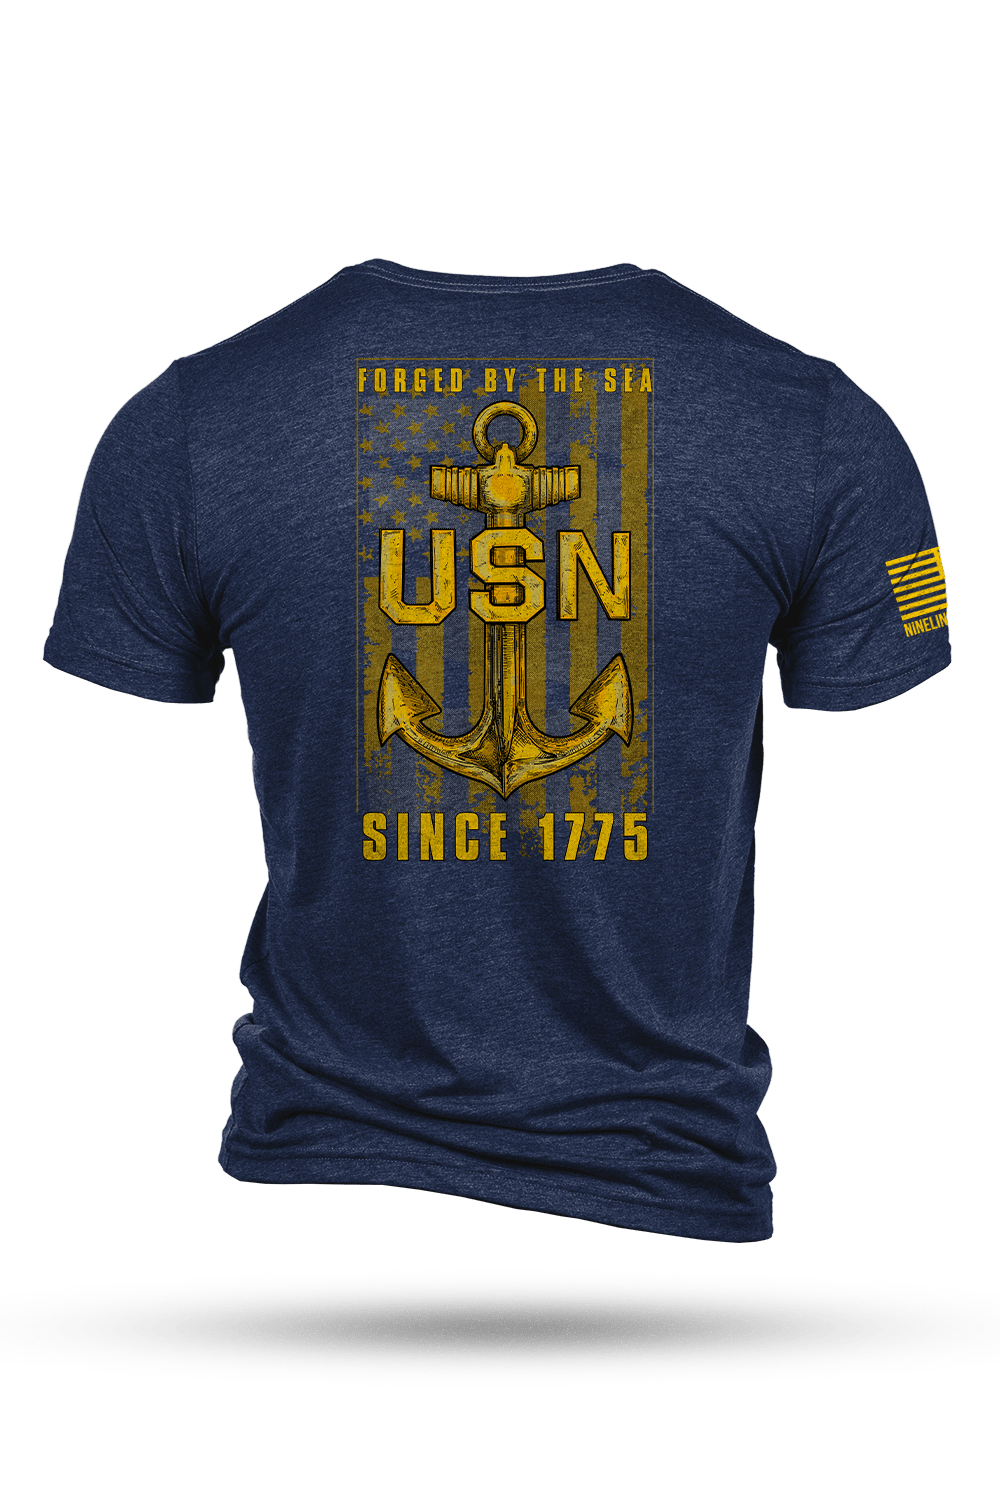 Men's Tri-Blend T-Shirt - Team RWB Navy B-Day - Nine Line Apparel